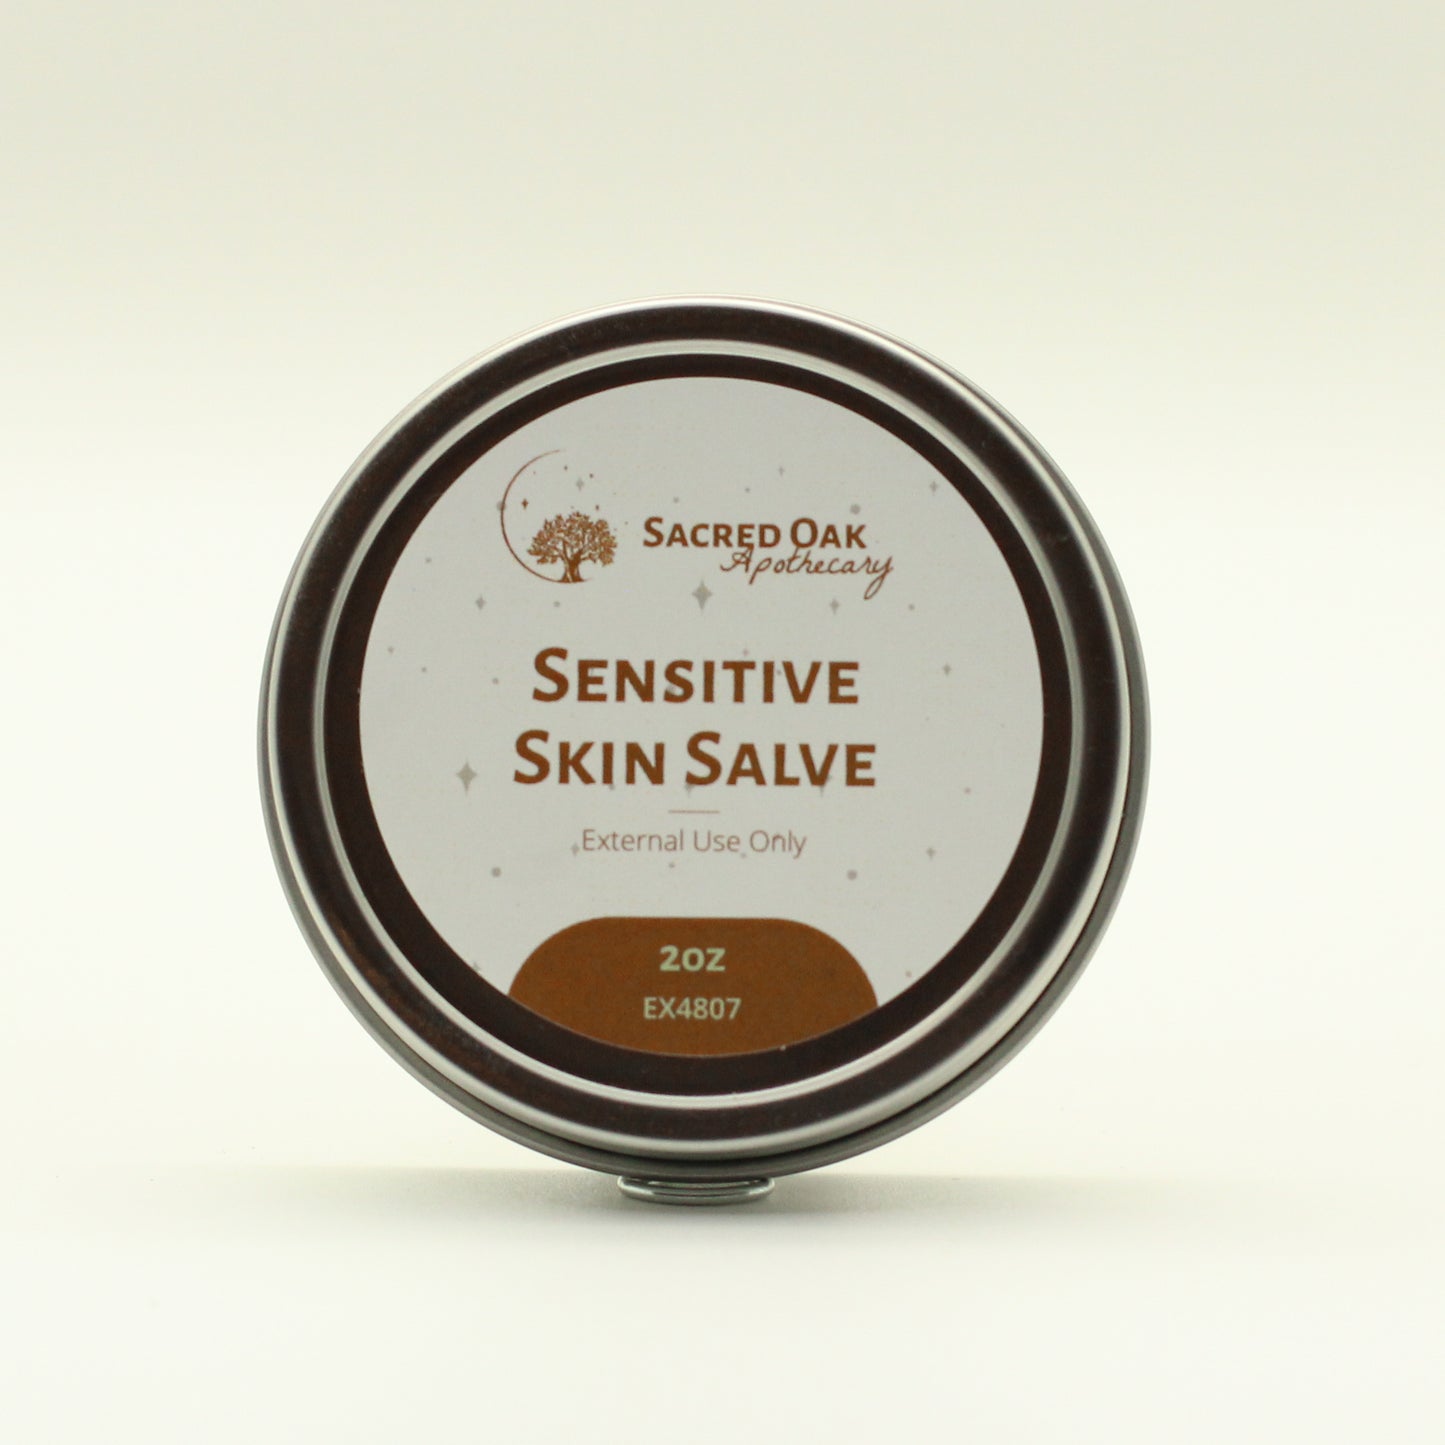 Sensitive Skin Salve